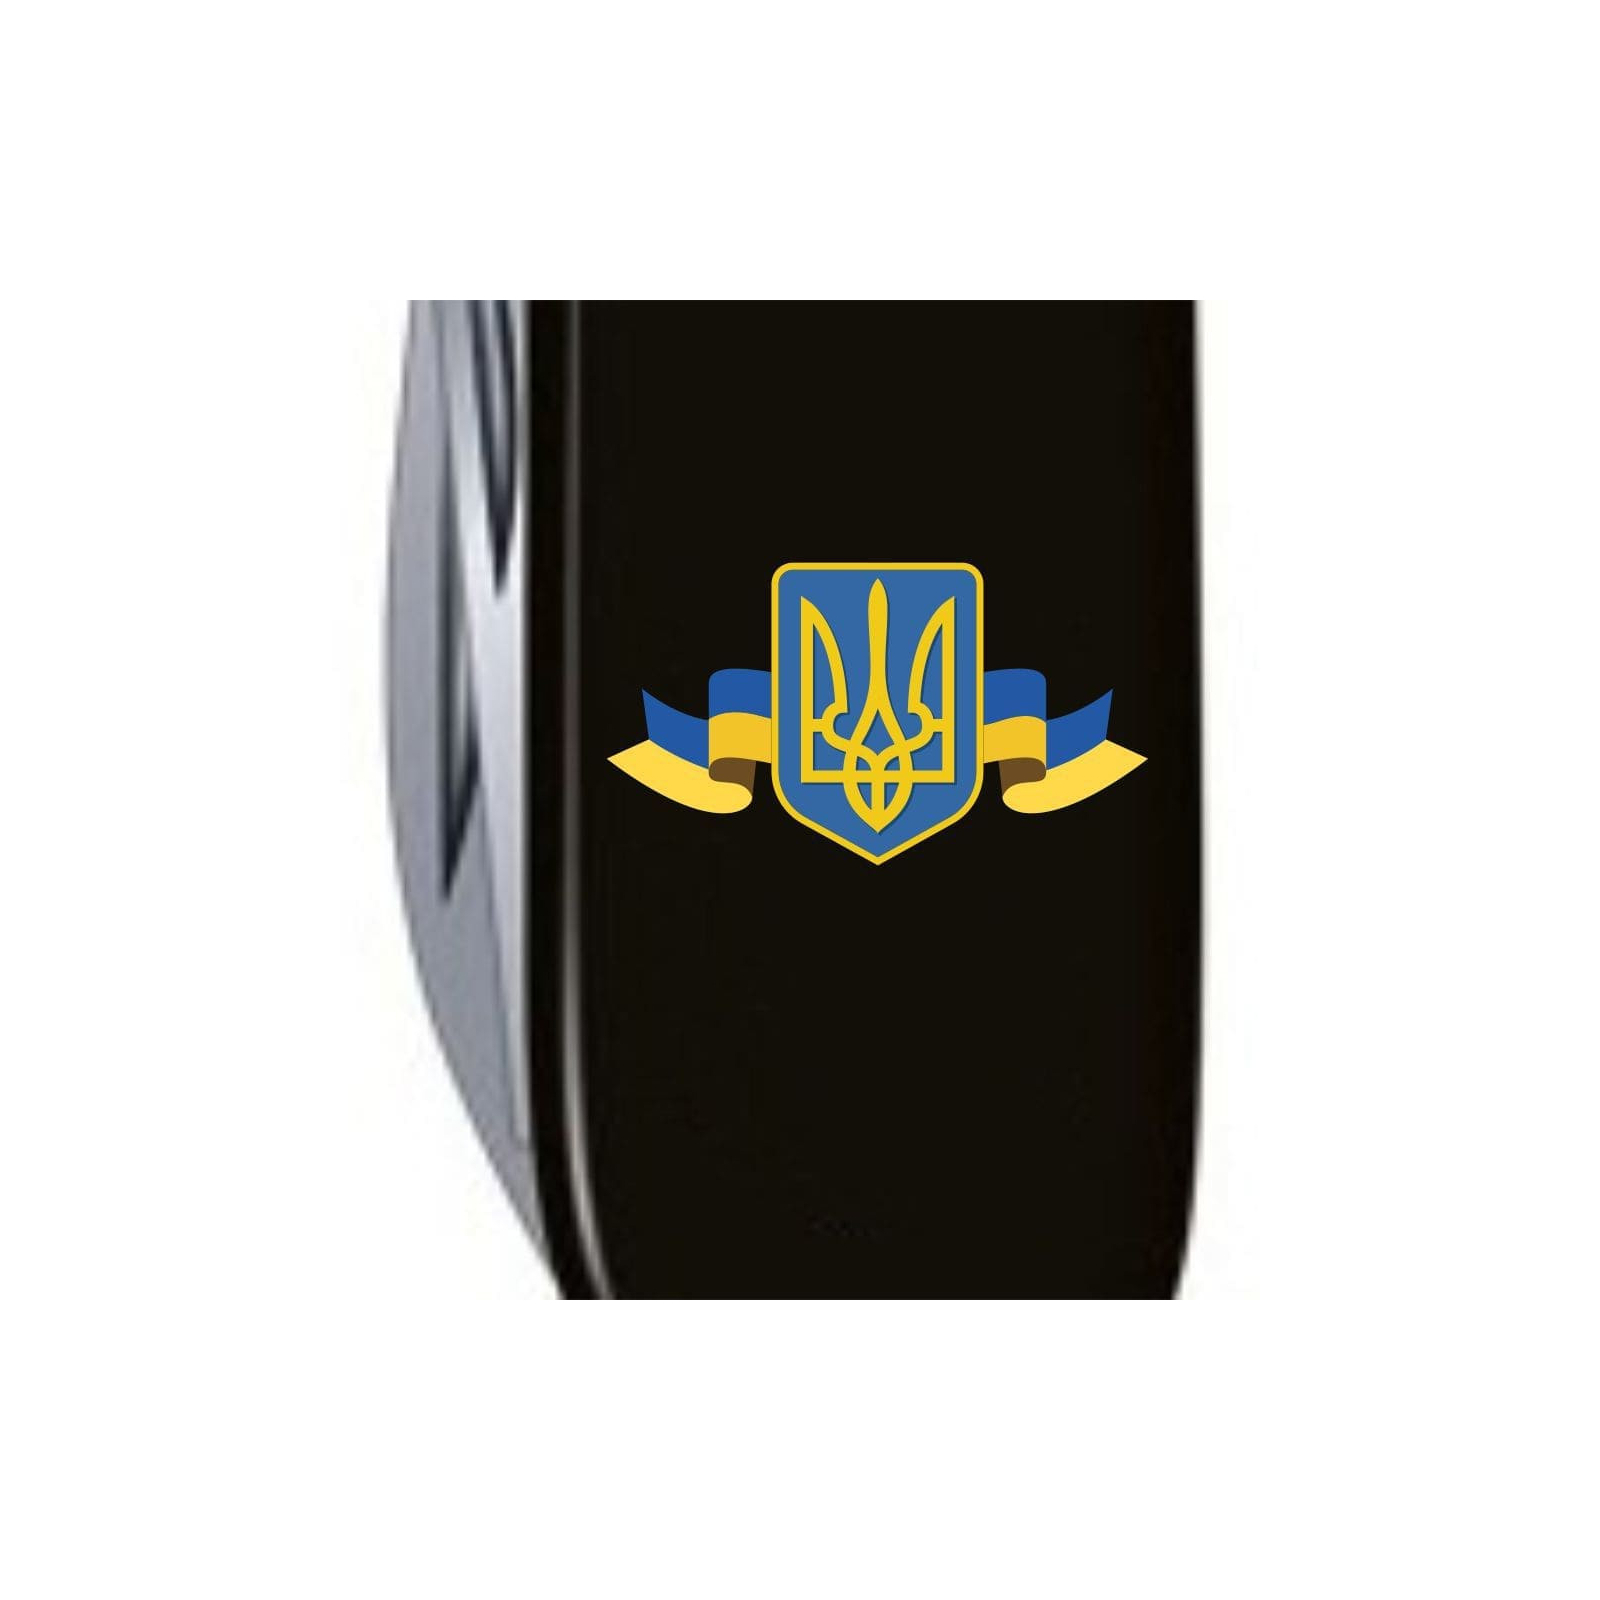 Нож Victorinox Huntsman Ukraine Black "Тризуб" (1.3713.3_T0010u) изображение 4